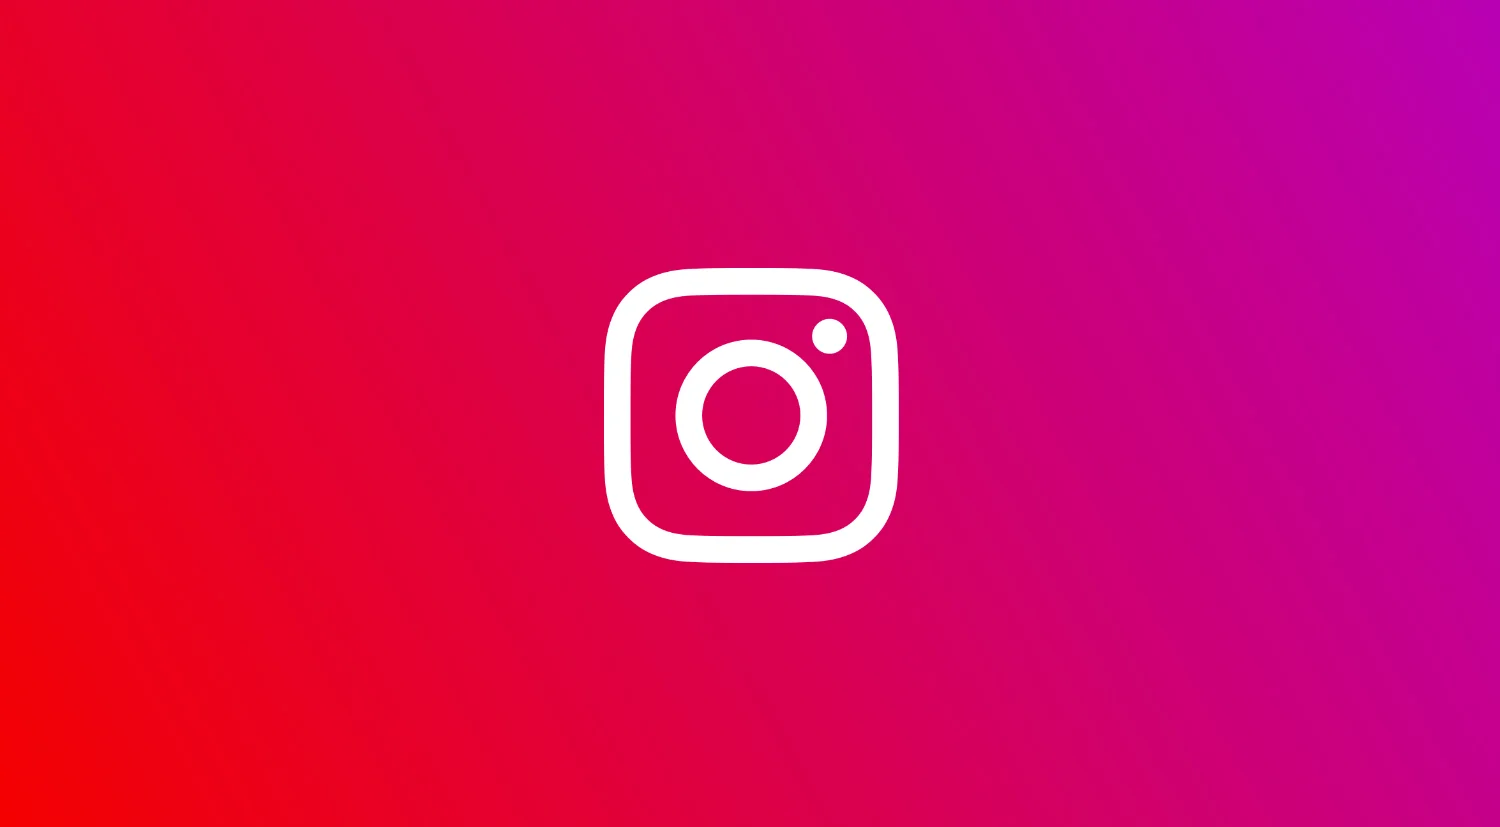 instagram bio